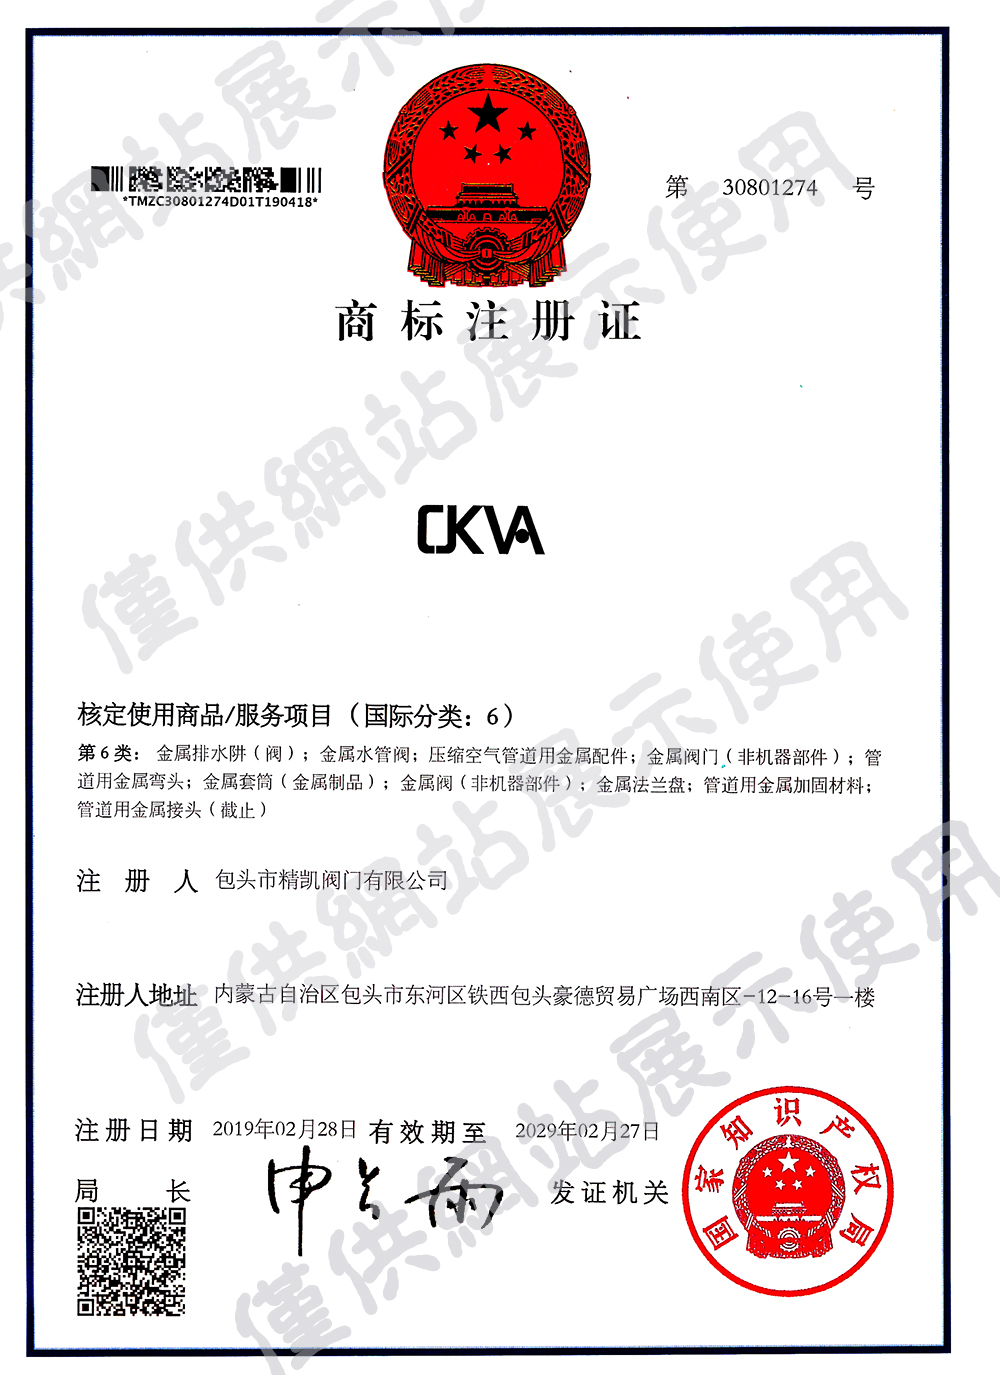 CKVA商标证正本扫描件.jpg